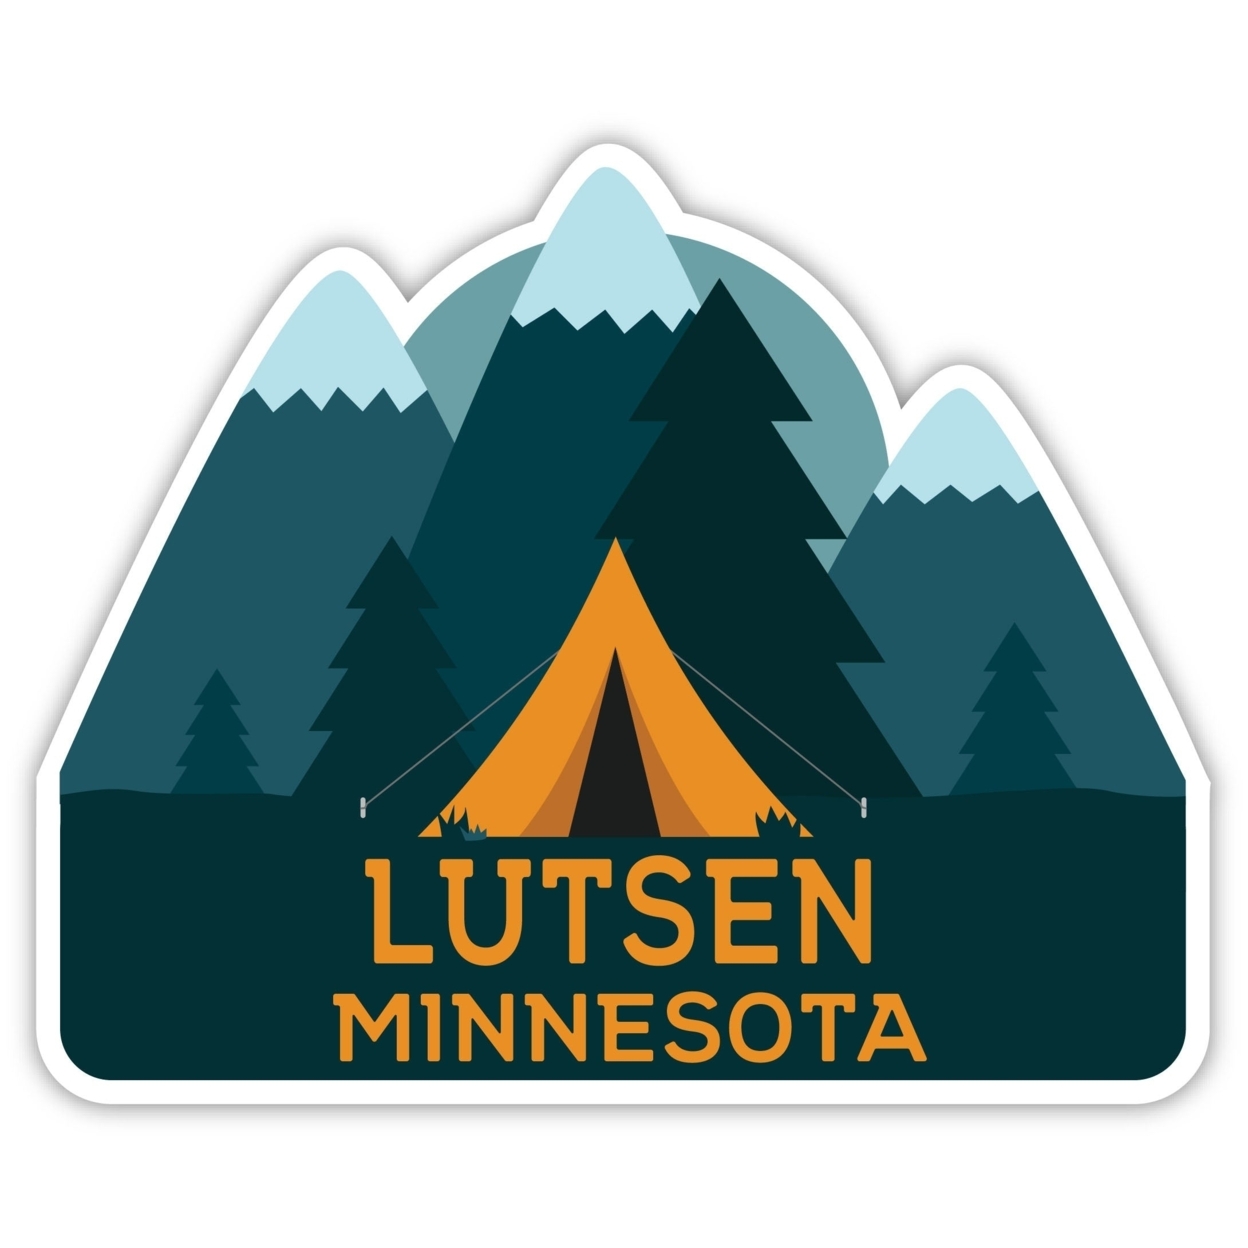 Lutsen Minnesota Souvenir Decorative Stickers (Choose Theme And Size) - 4-Inch, Adventures Awaits